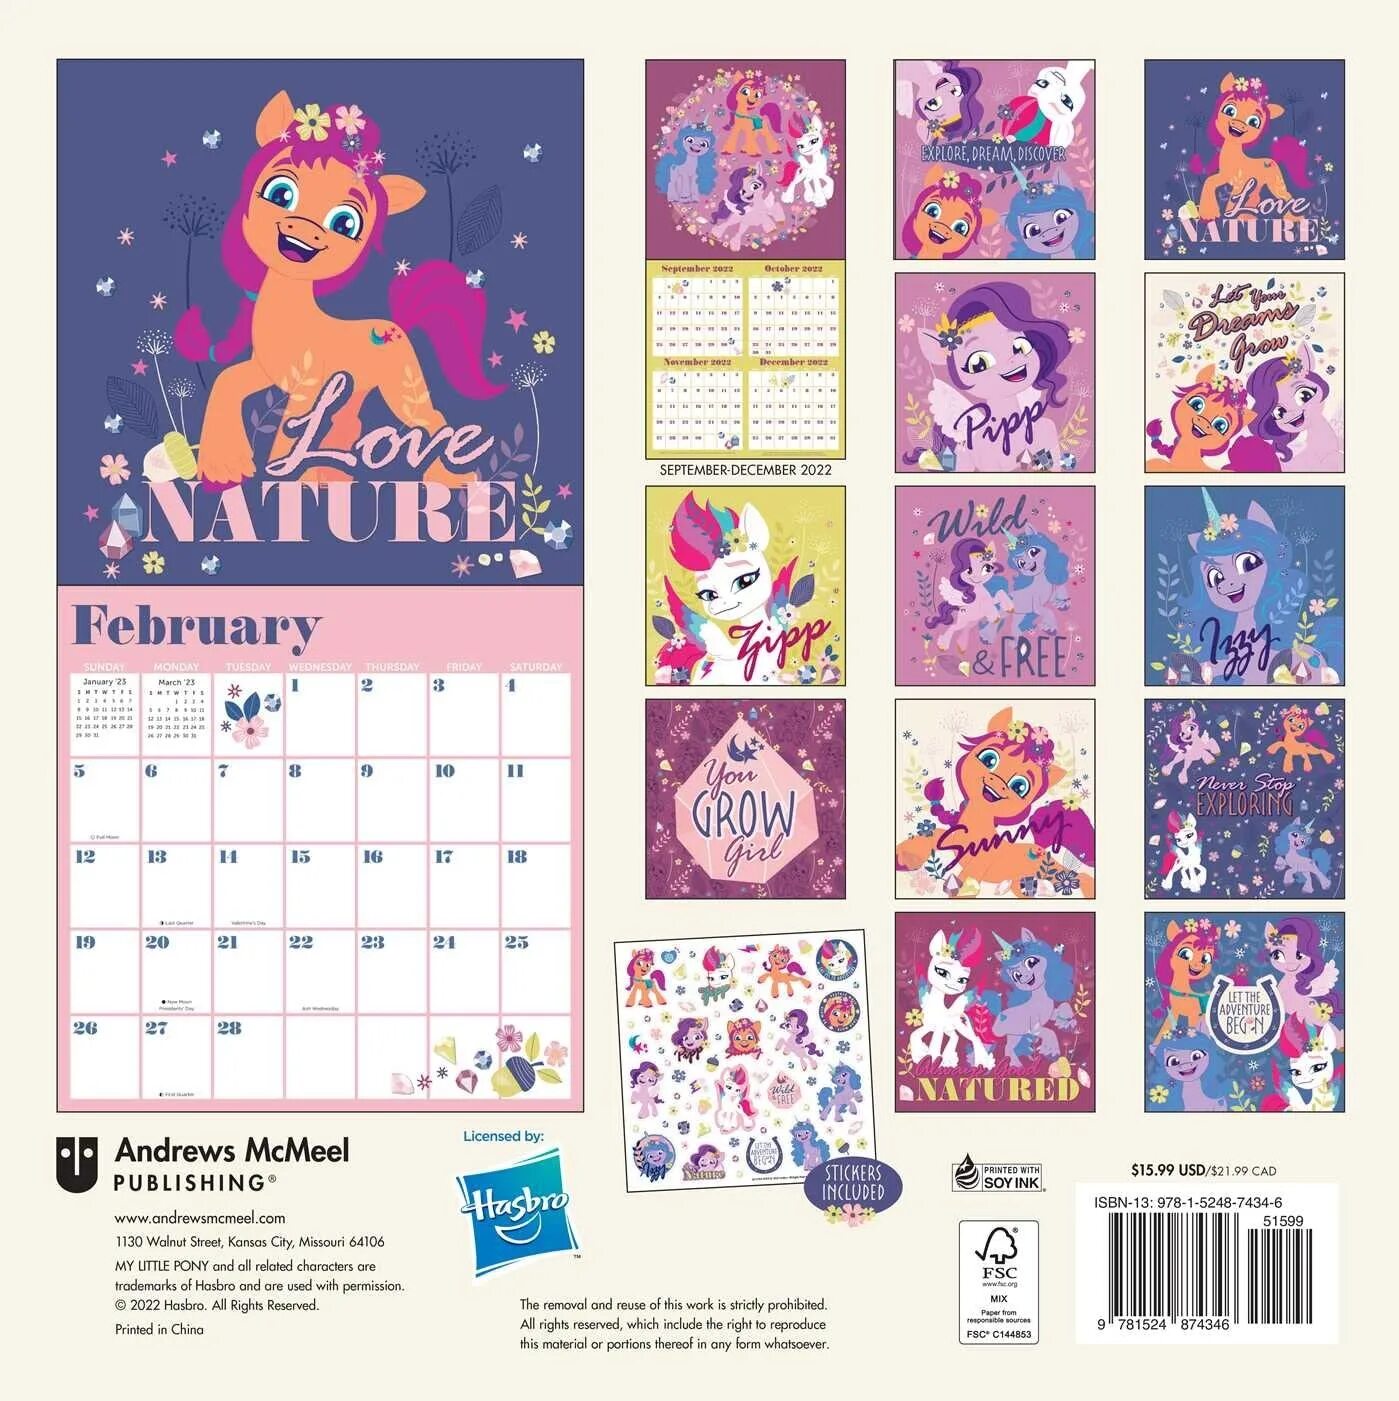 My little pony 2023. Календарь 2023 my little Pony. Календарь my little Pony 2023 журнал. Детский календарь 2023 с пони.